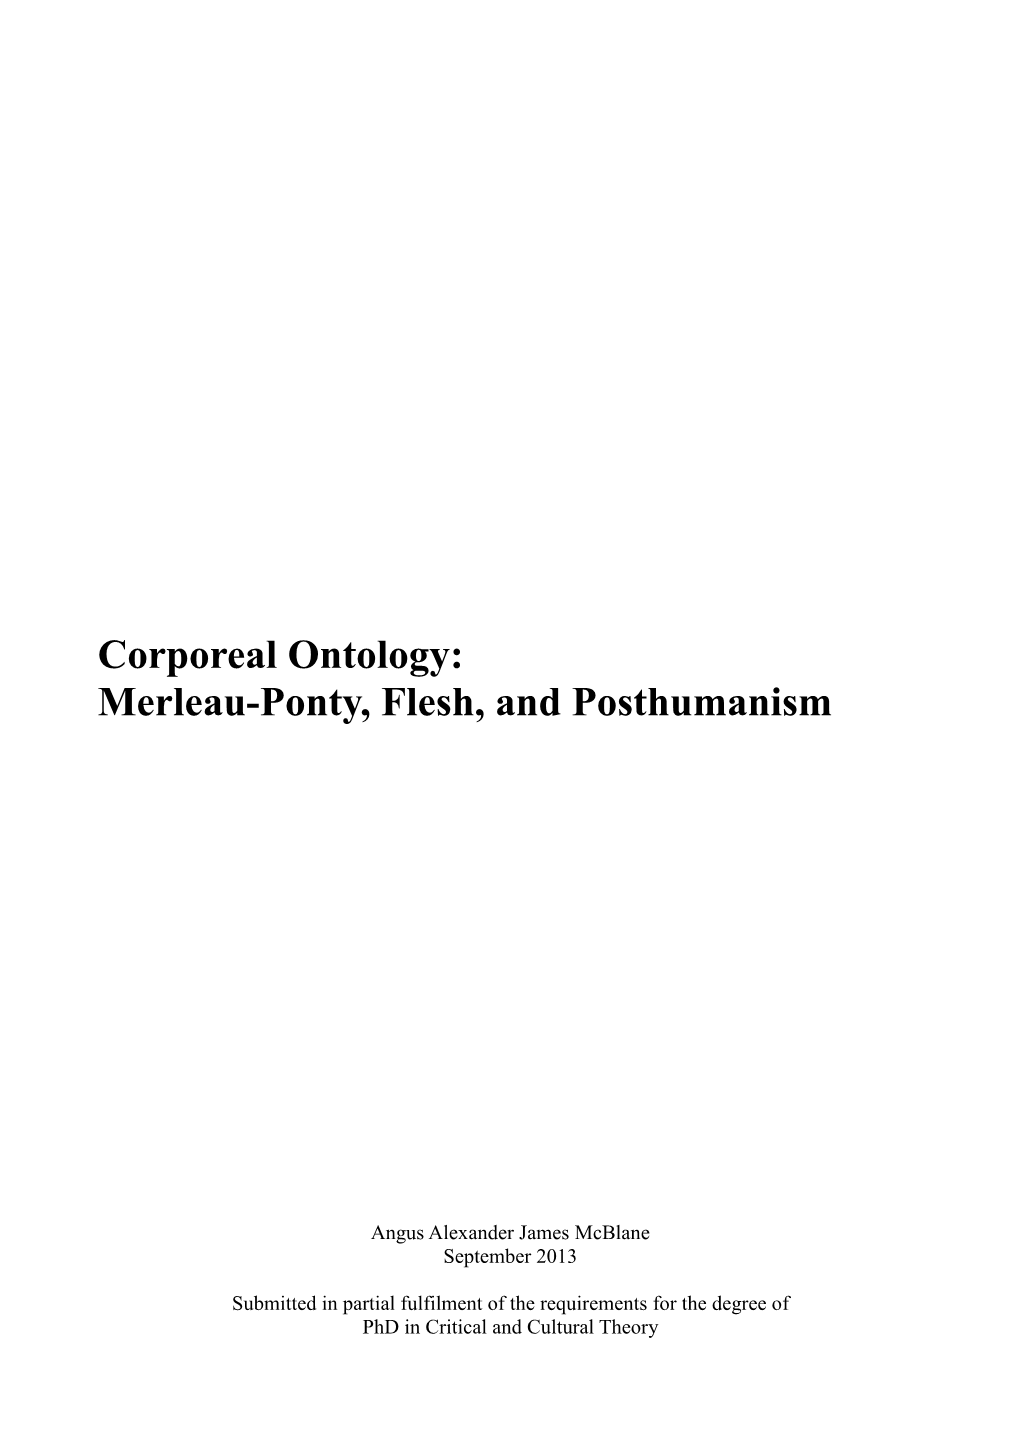 Merleau-Ponty, Flesh, and Posthumanism